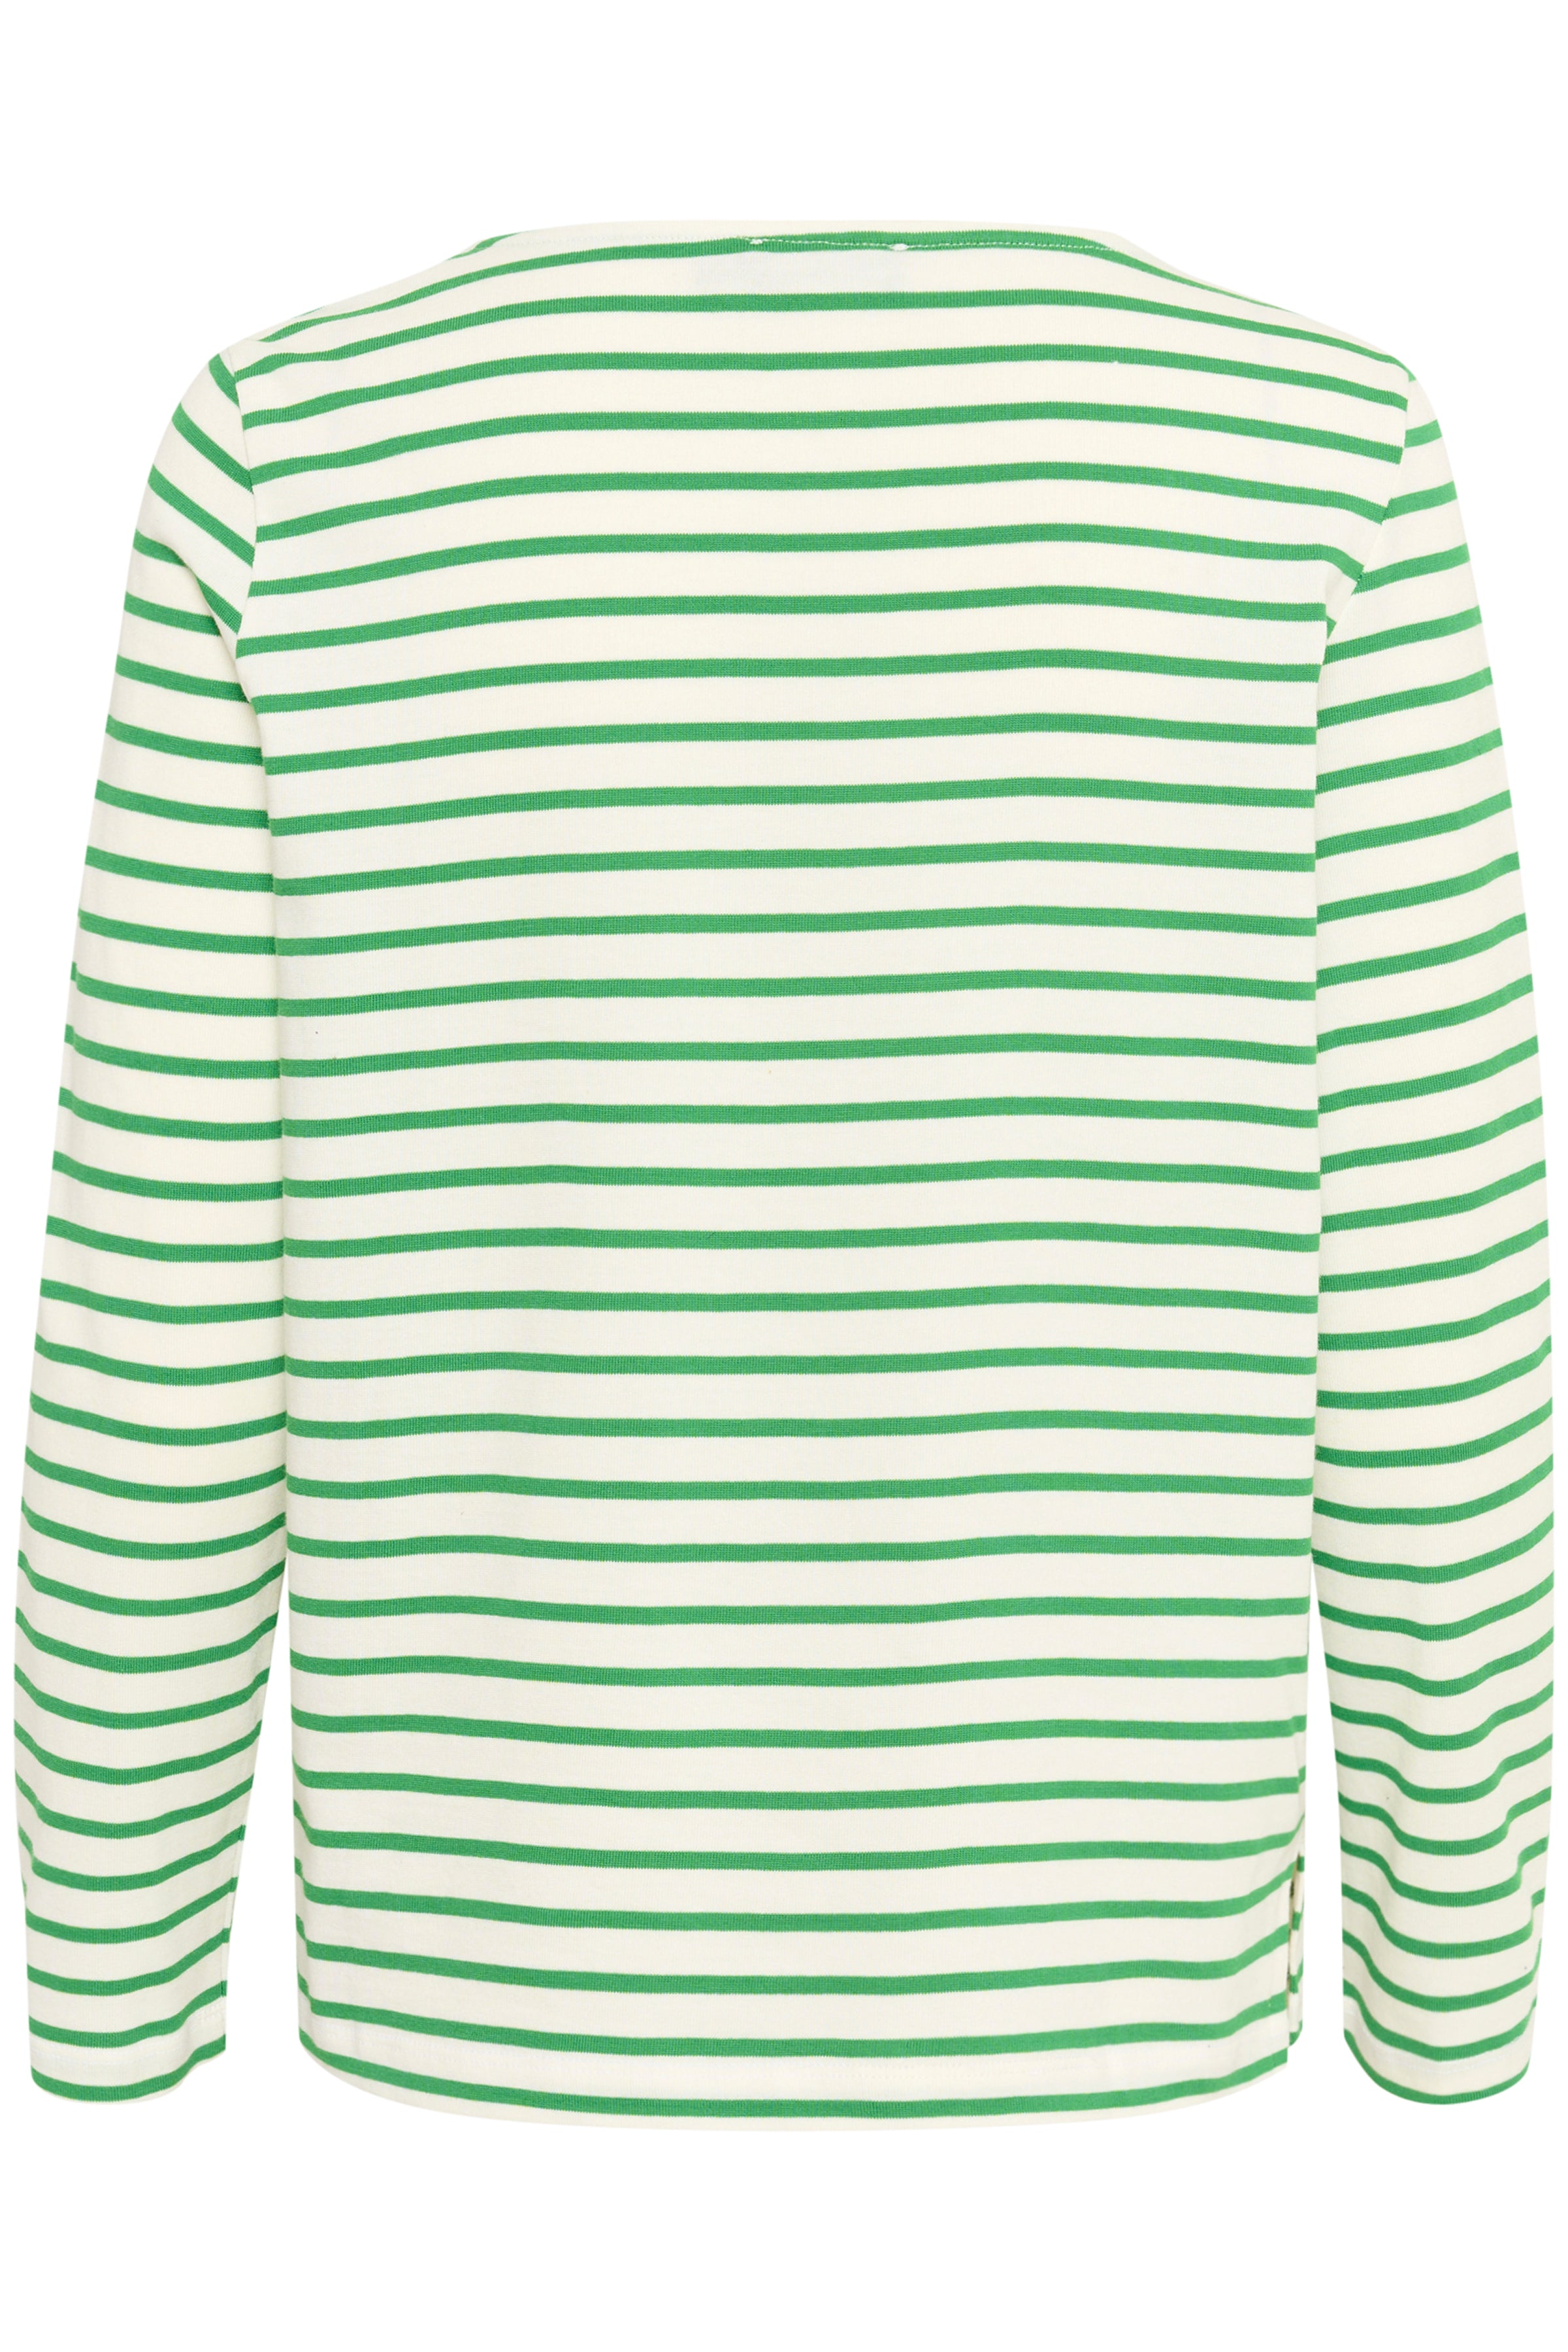 Soaked Neo Long sleeve - Green stripe